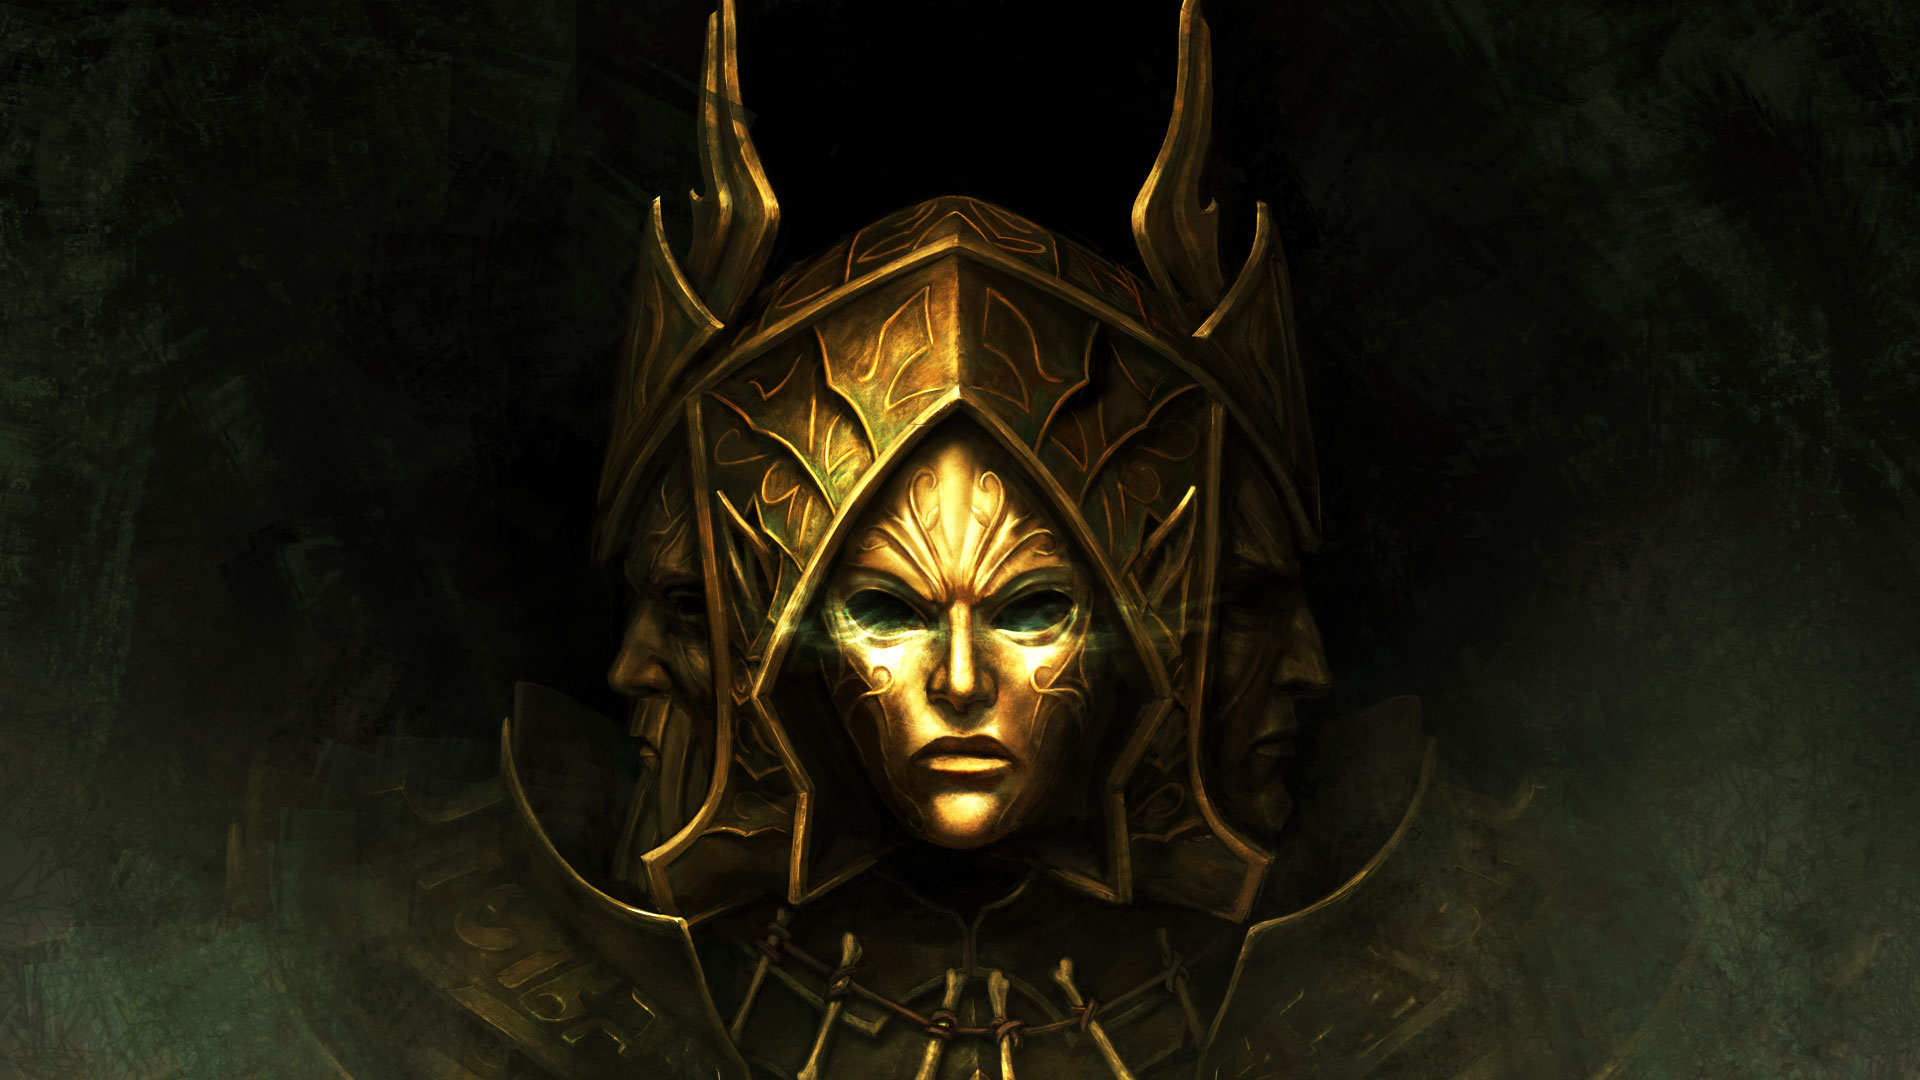 HD wallpaper featuring a golden mystical helmet from Divinity: Original Sin II, set against a dark, artistic background.